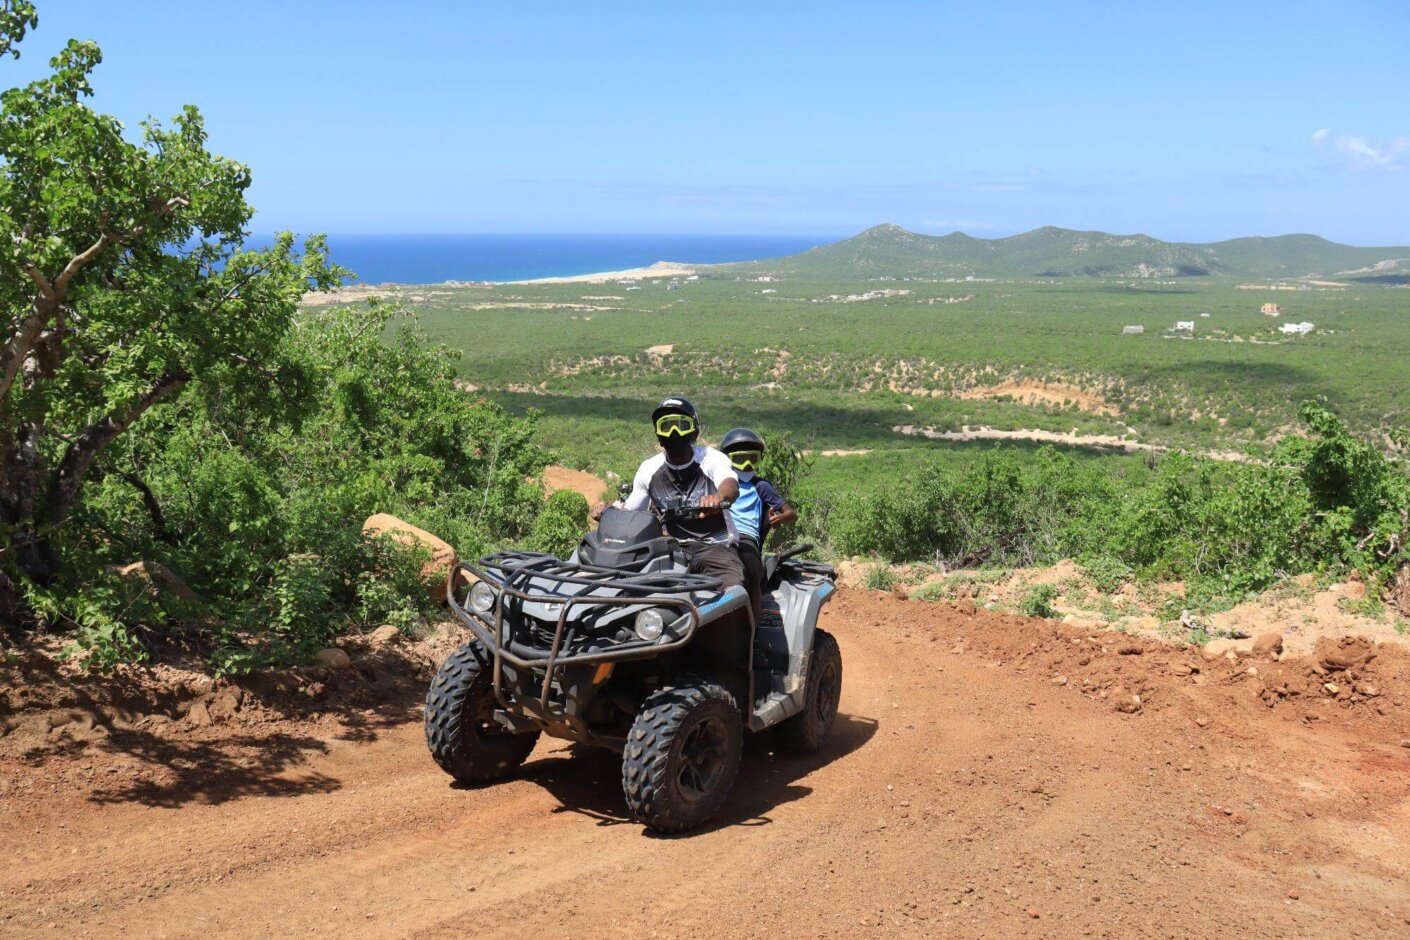 Godfrey and his son take an ATV tour on vacation in Cabo San Lucas, Mexico.